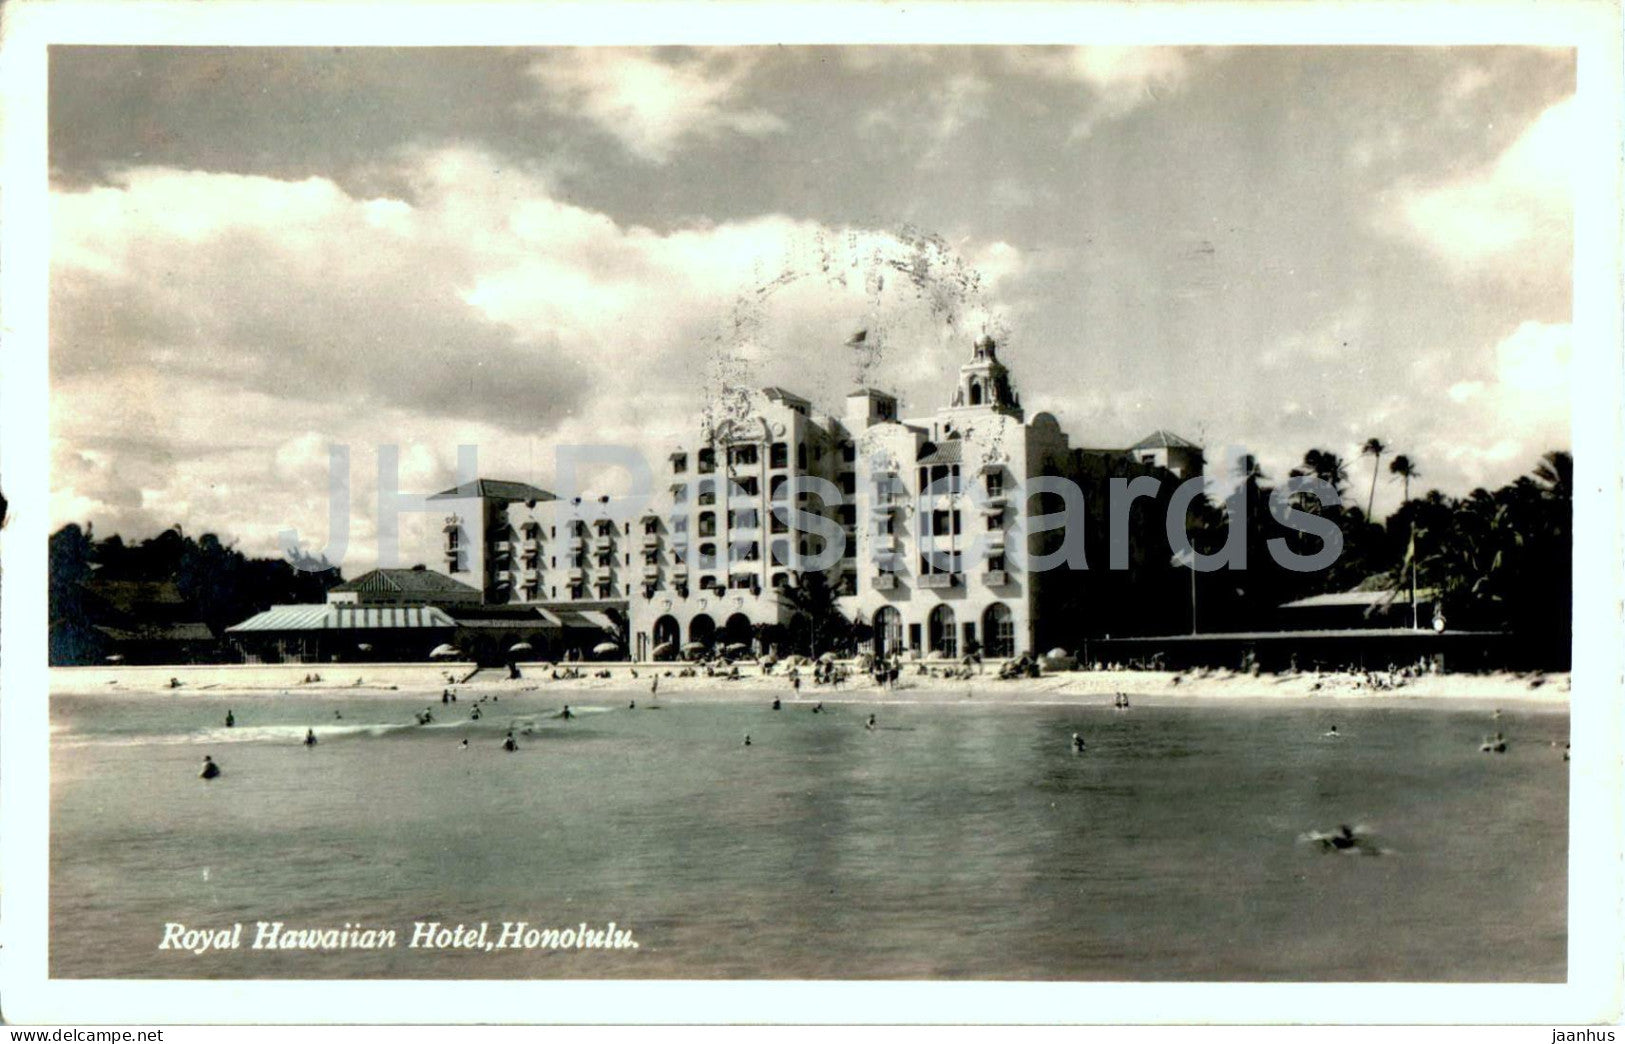 Royal Hawaiian Hotel - Honolulu - old postcard - 1933 - USA - used - JH Postcards